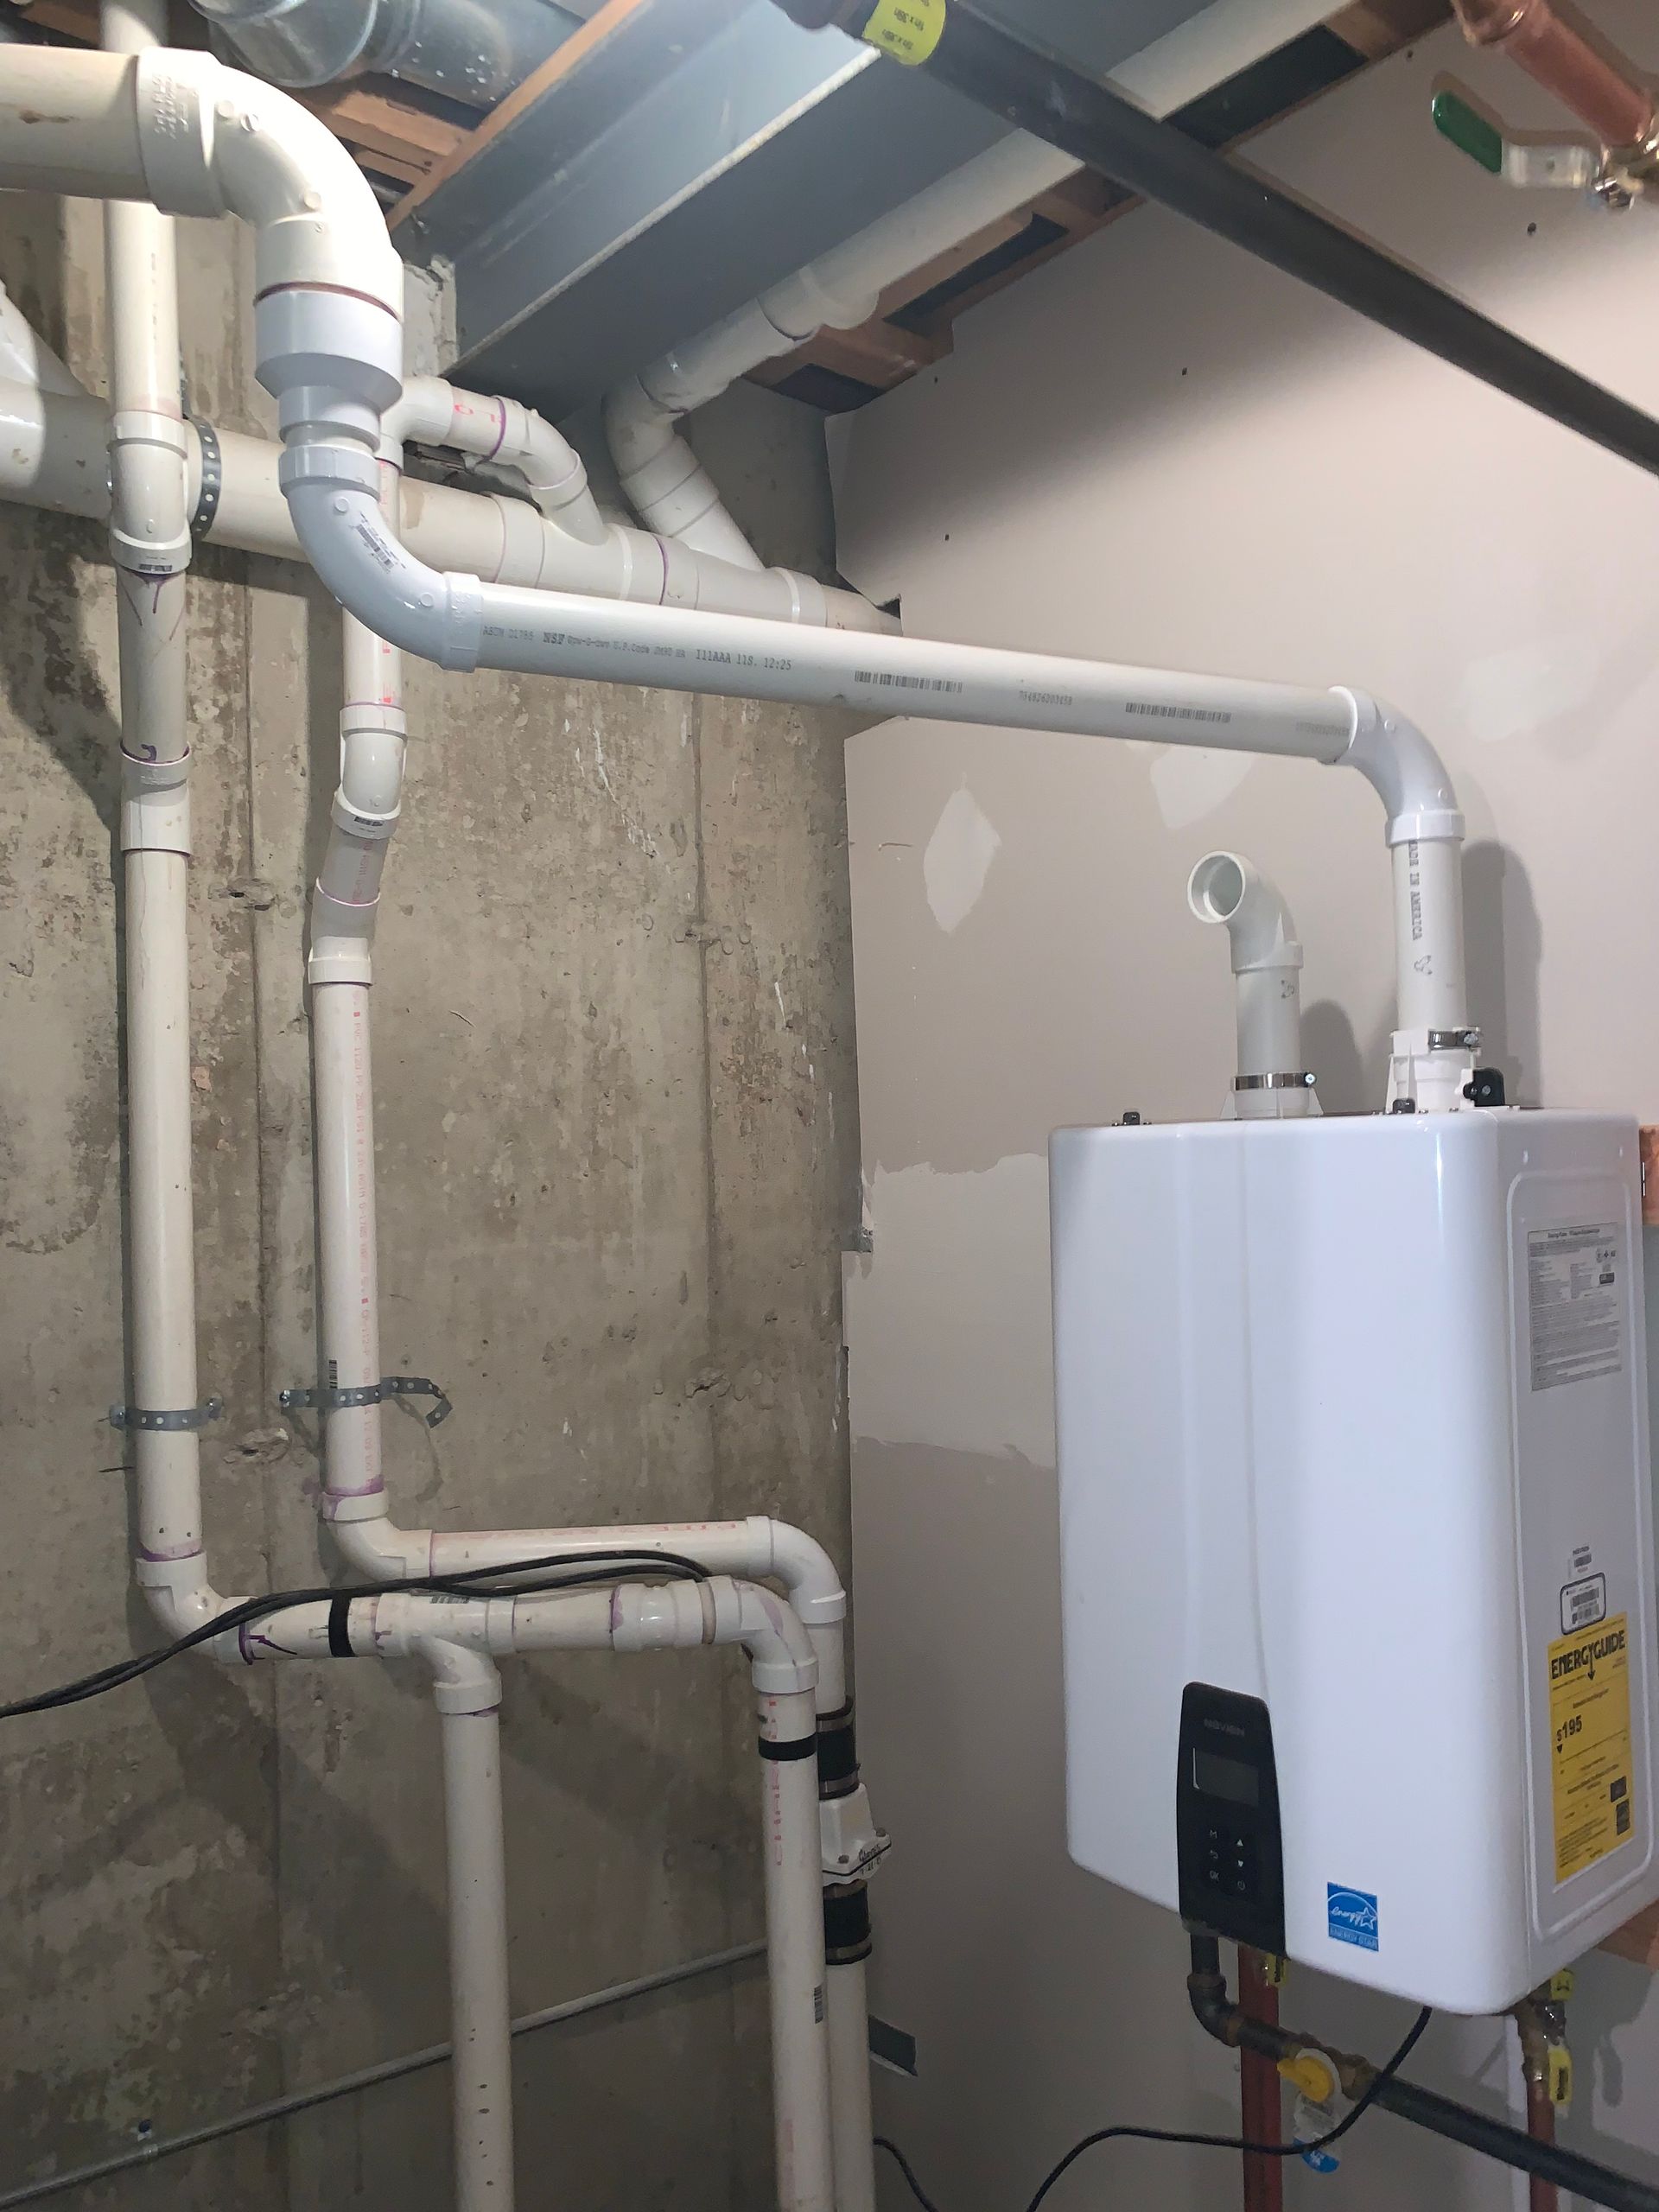 Wheaton Tankless Water Heater Installation in Basement